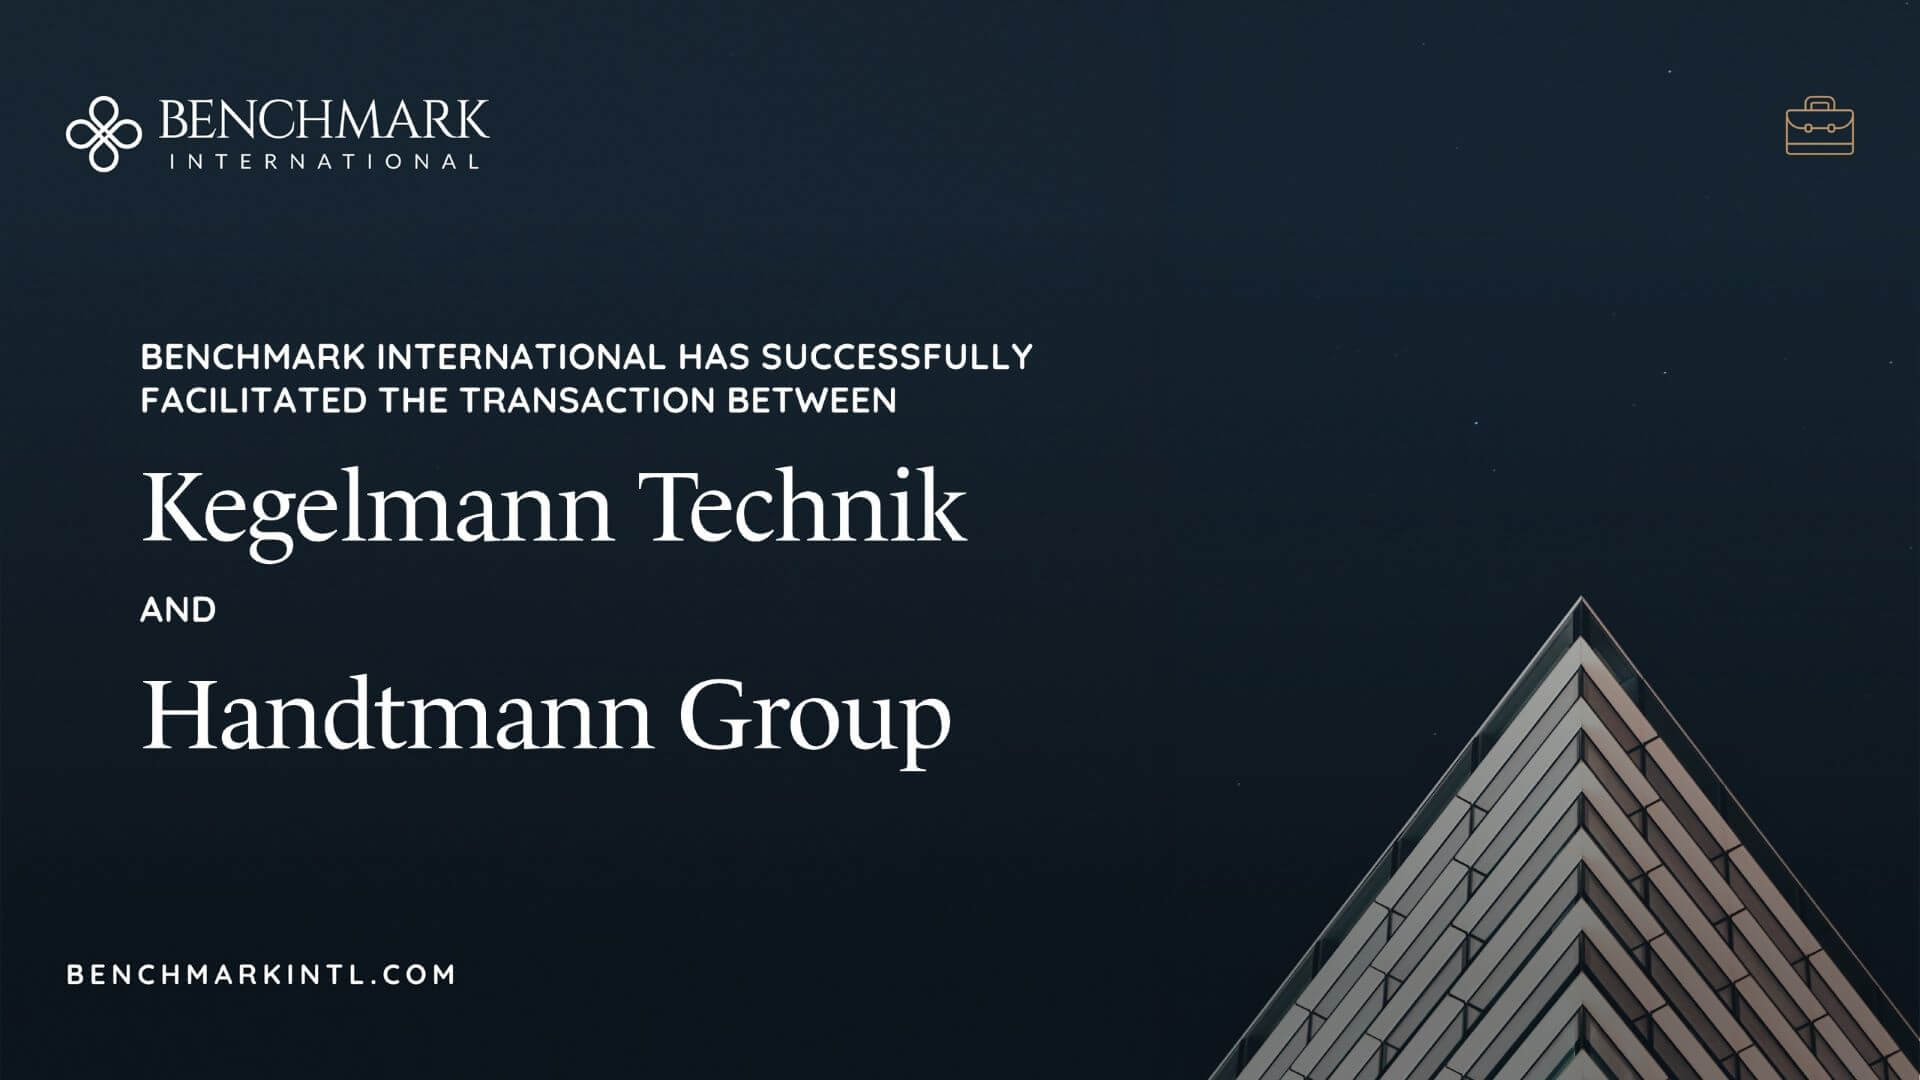 Benchmark International Successfully Facilitated the Transaction Between Kegelmann Technik and Handtmann Group